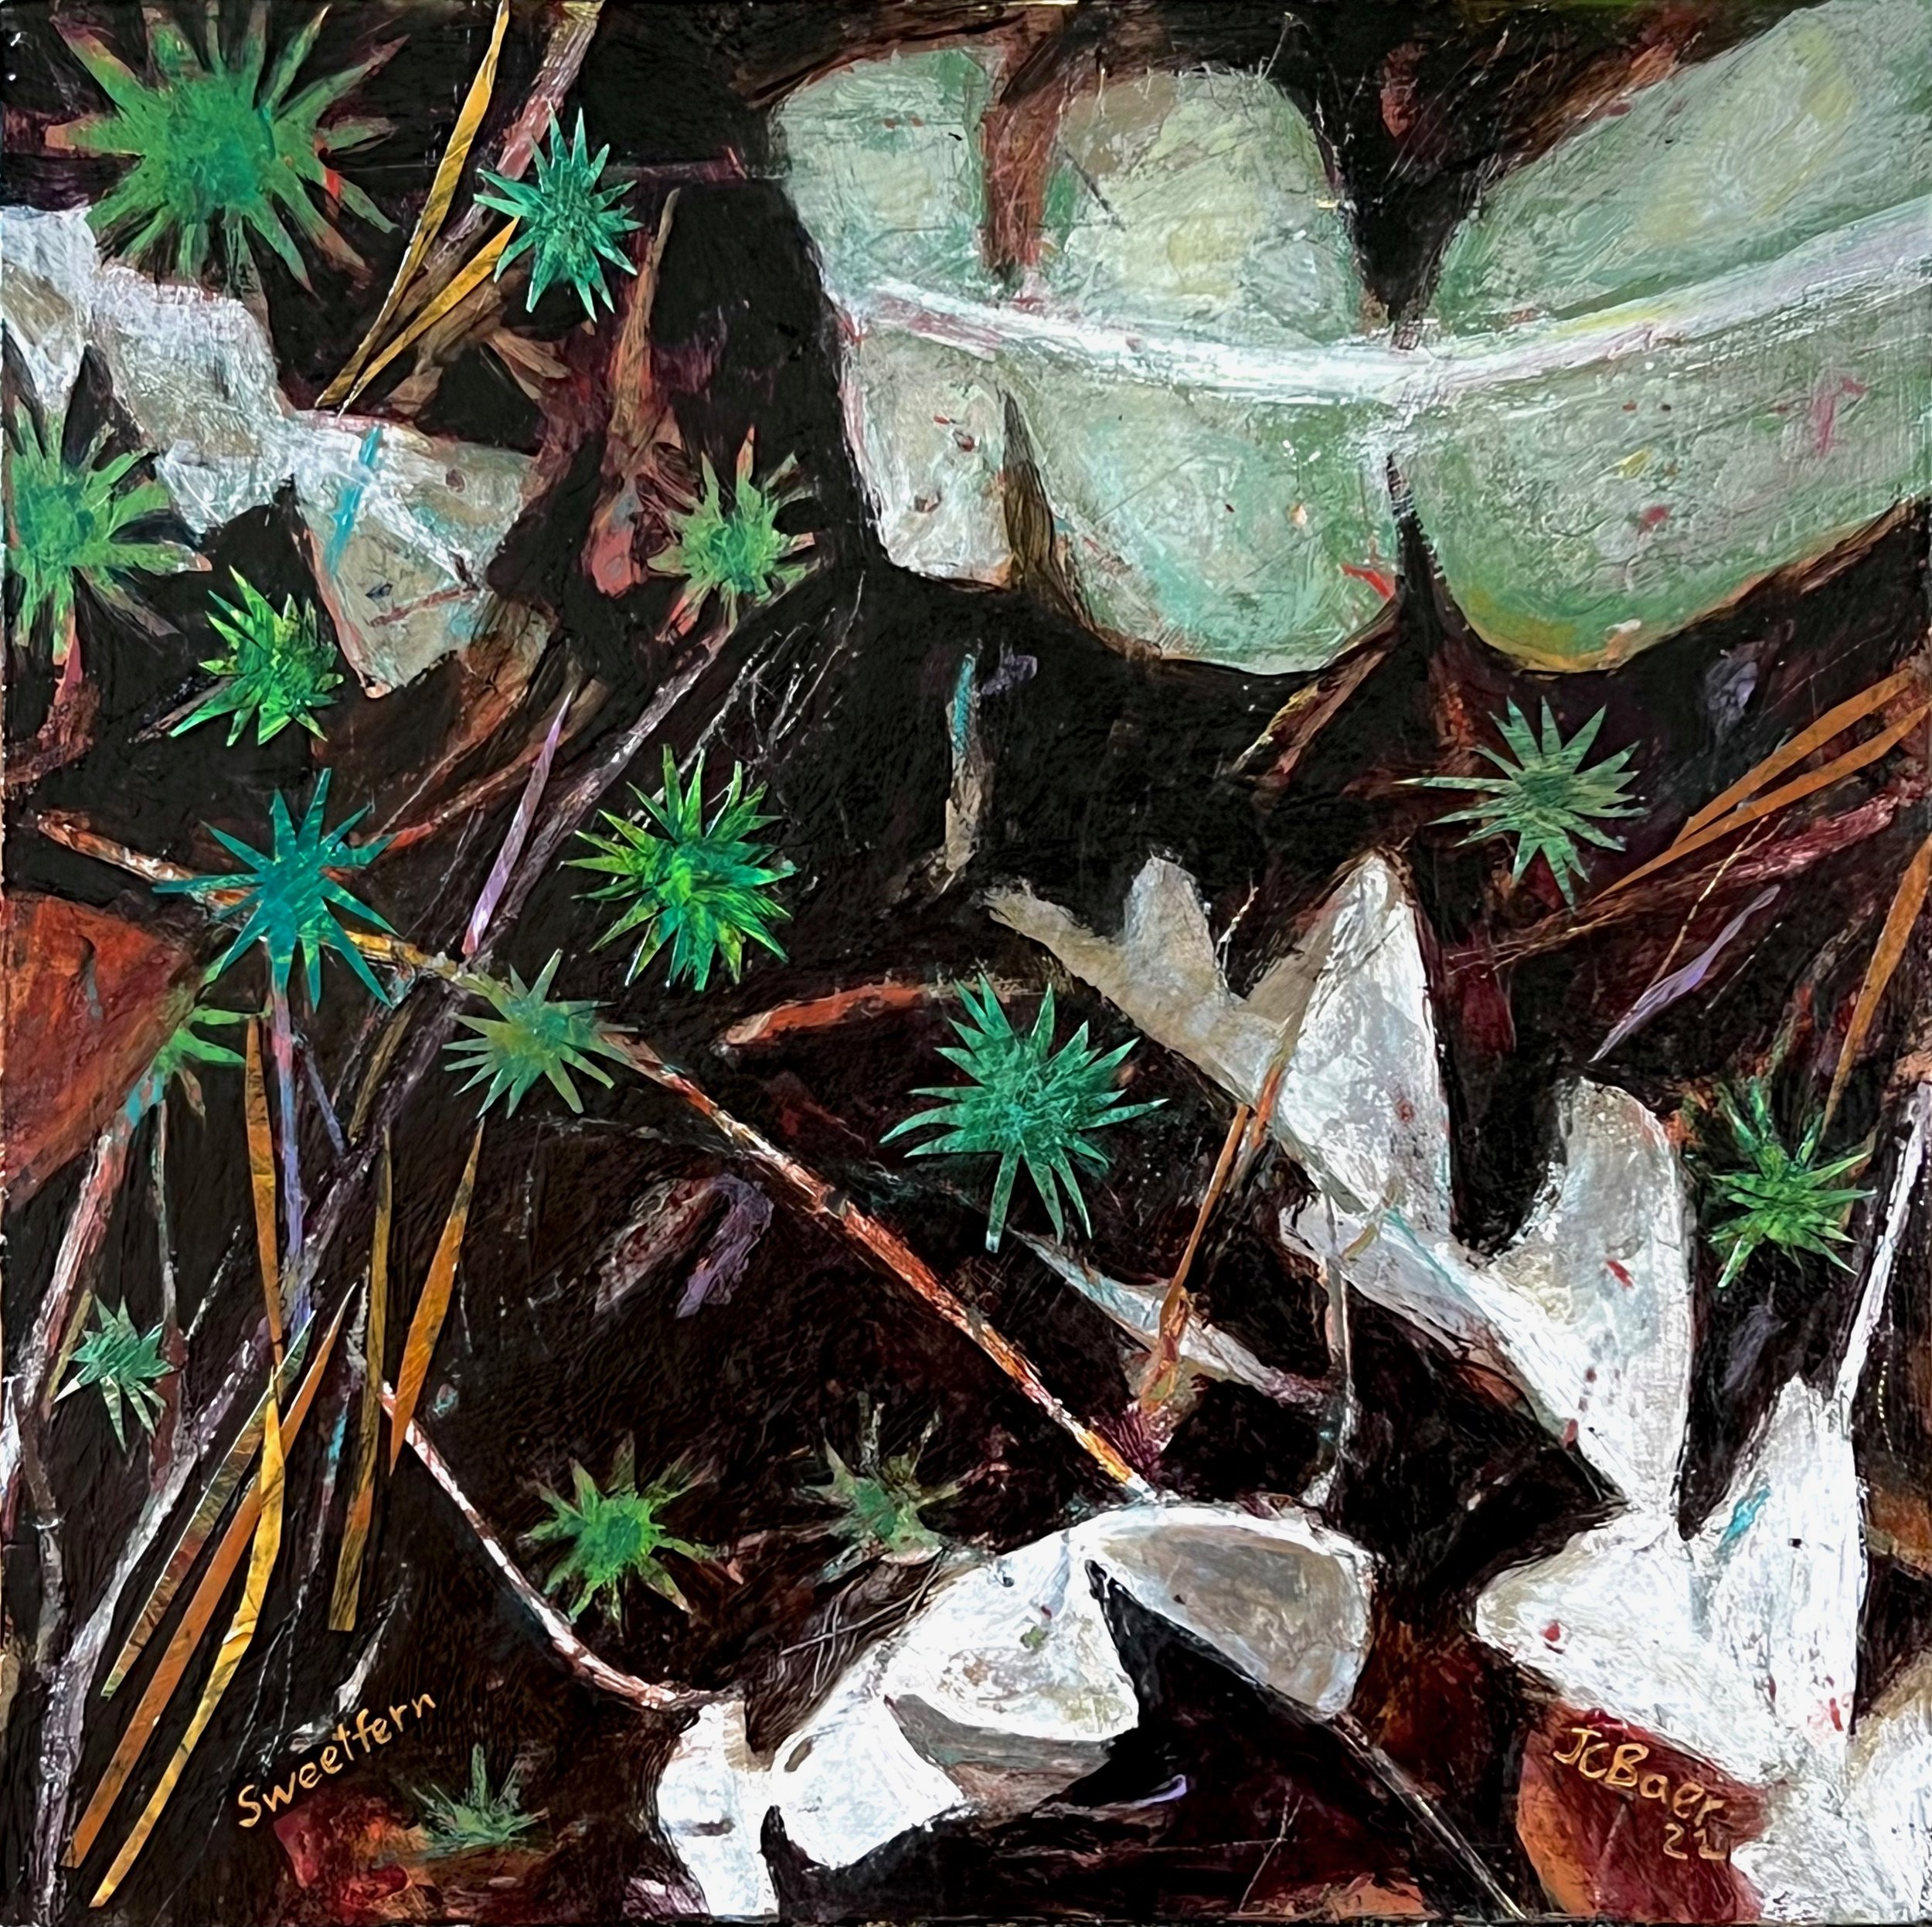 Sweetfern (Comptonia peregrina), 2022, acrylic on wood panel, 12x12”, $700 